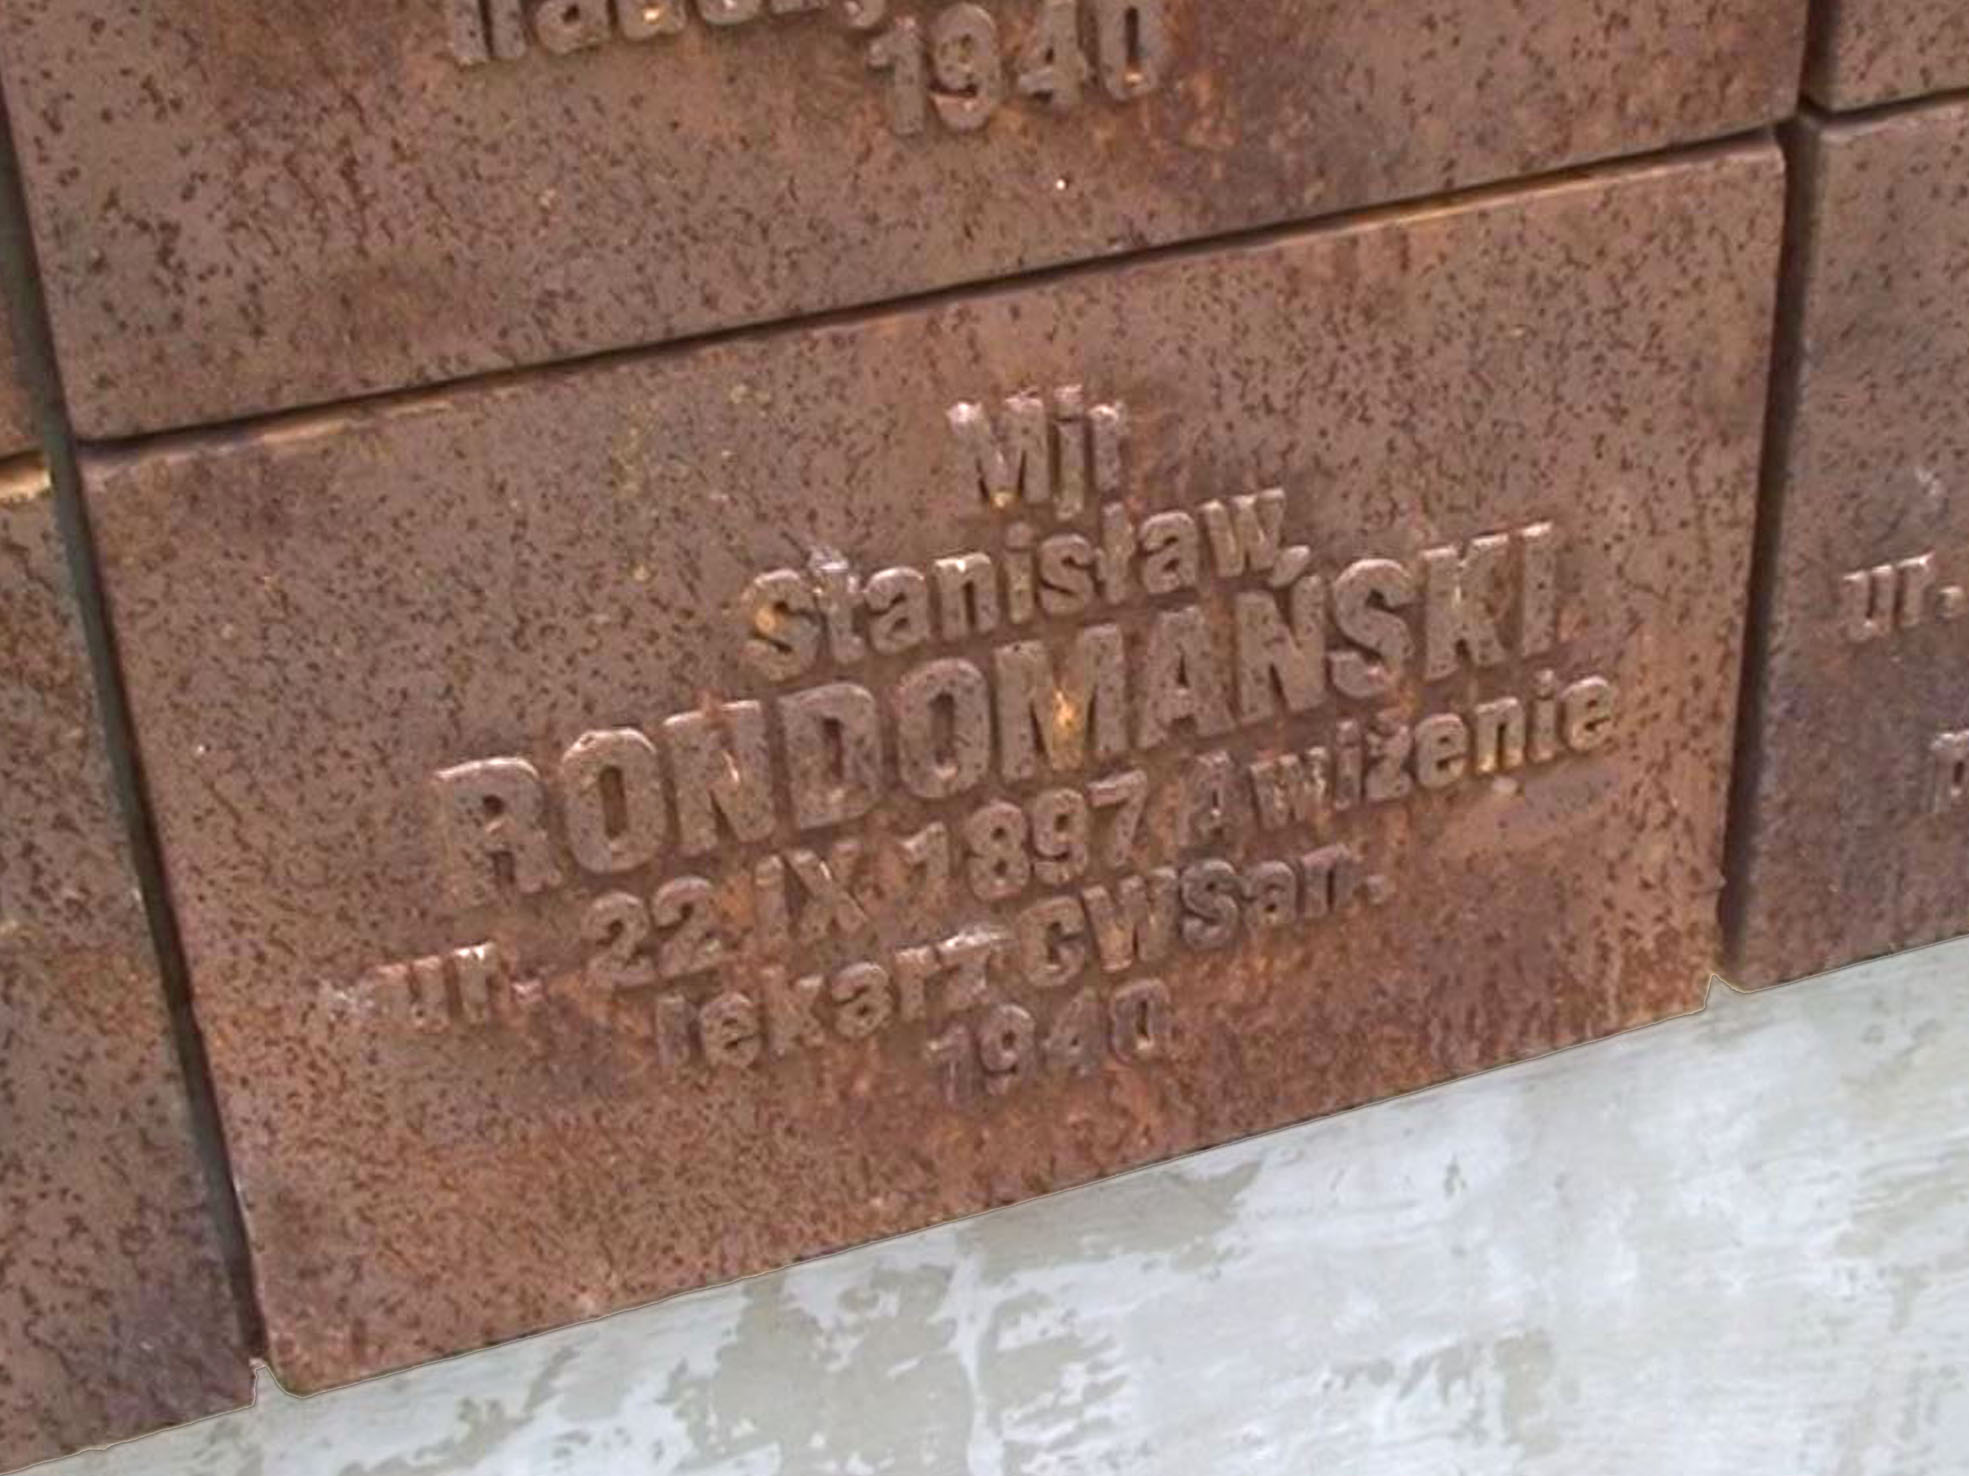 Mjr-Rondomanski